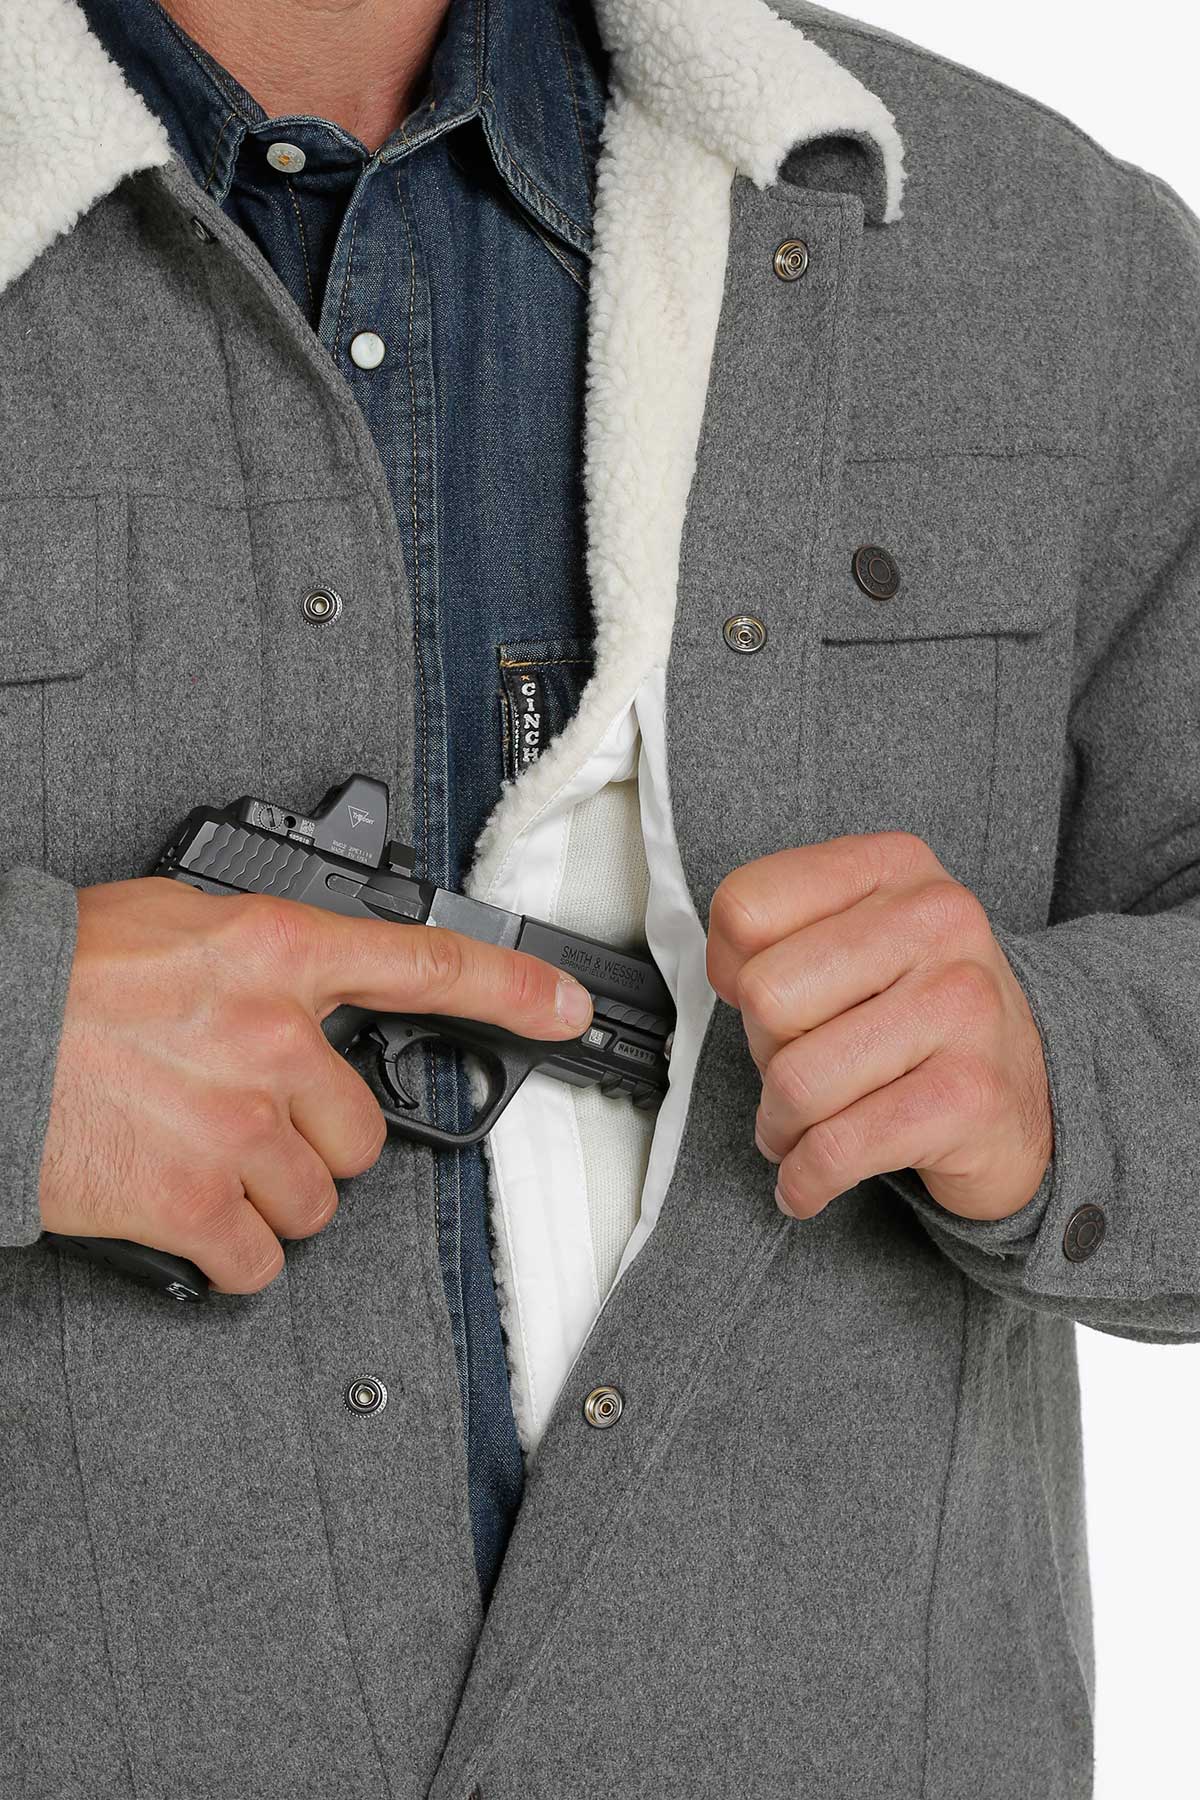 CINCH Men's Concealed Carry Trucker Jacket – Love on a Hanger